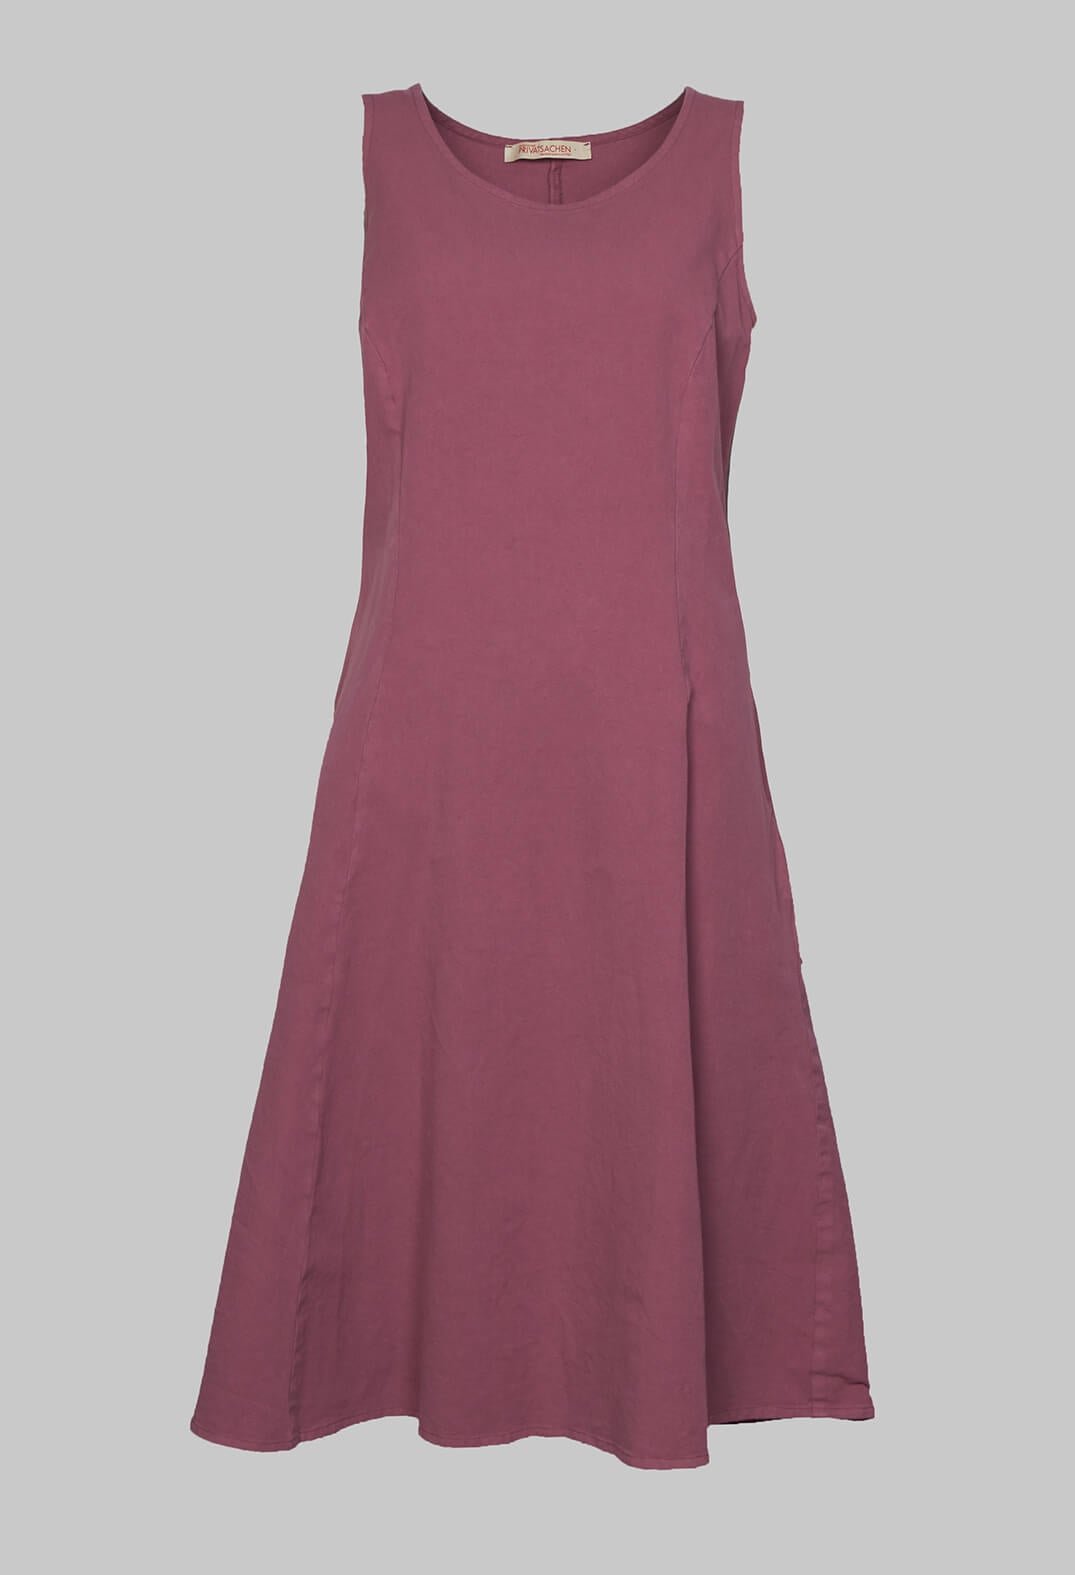 Monethese Dress in Rosenholz Pink